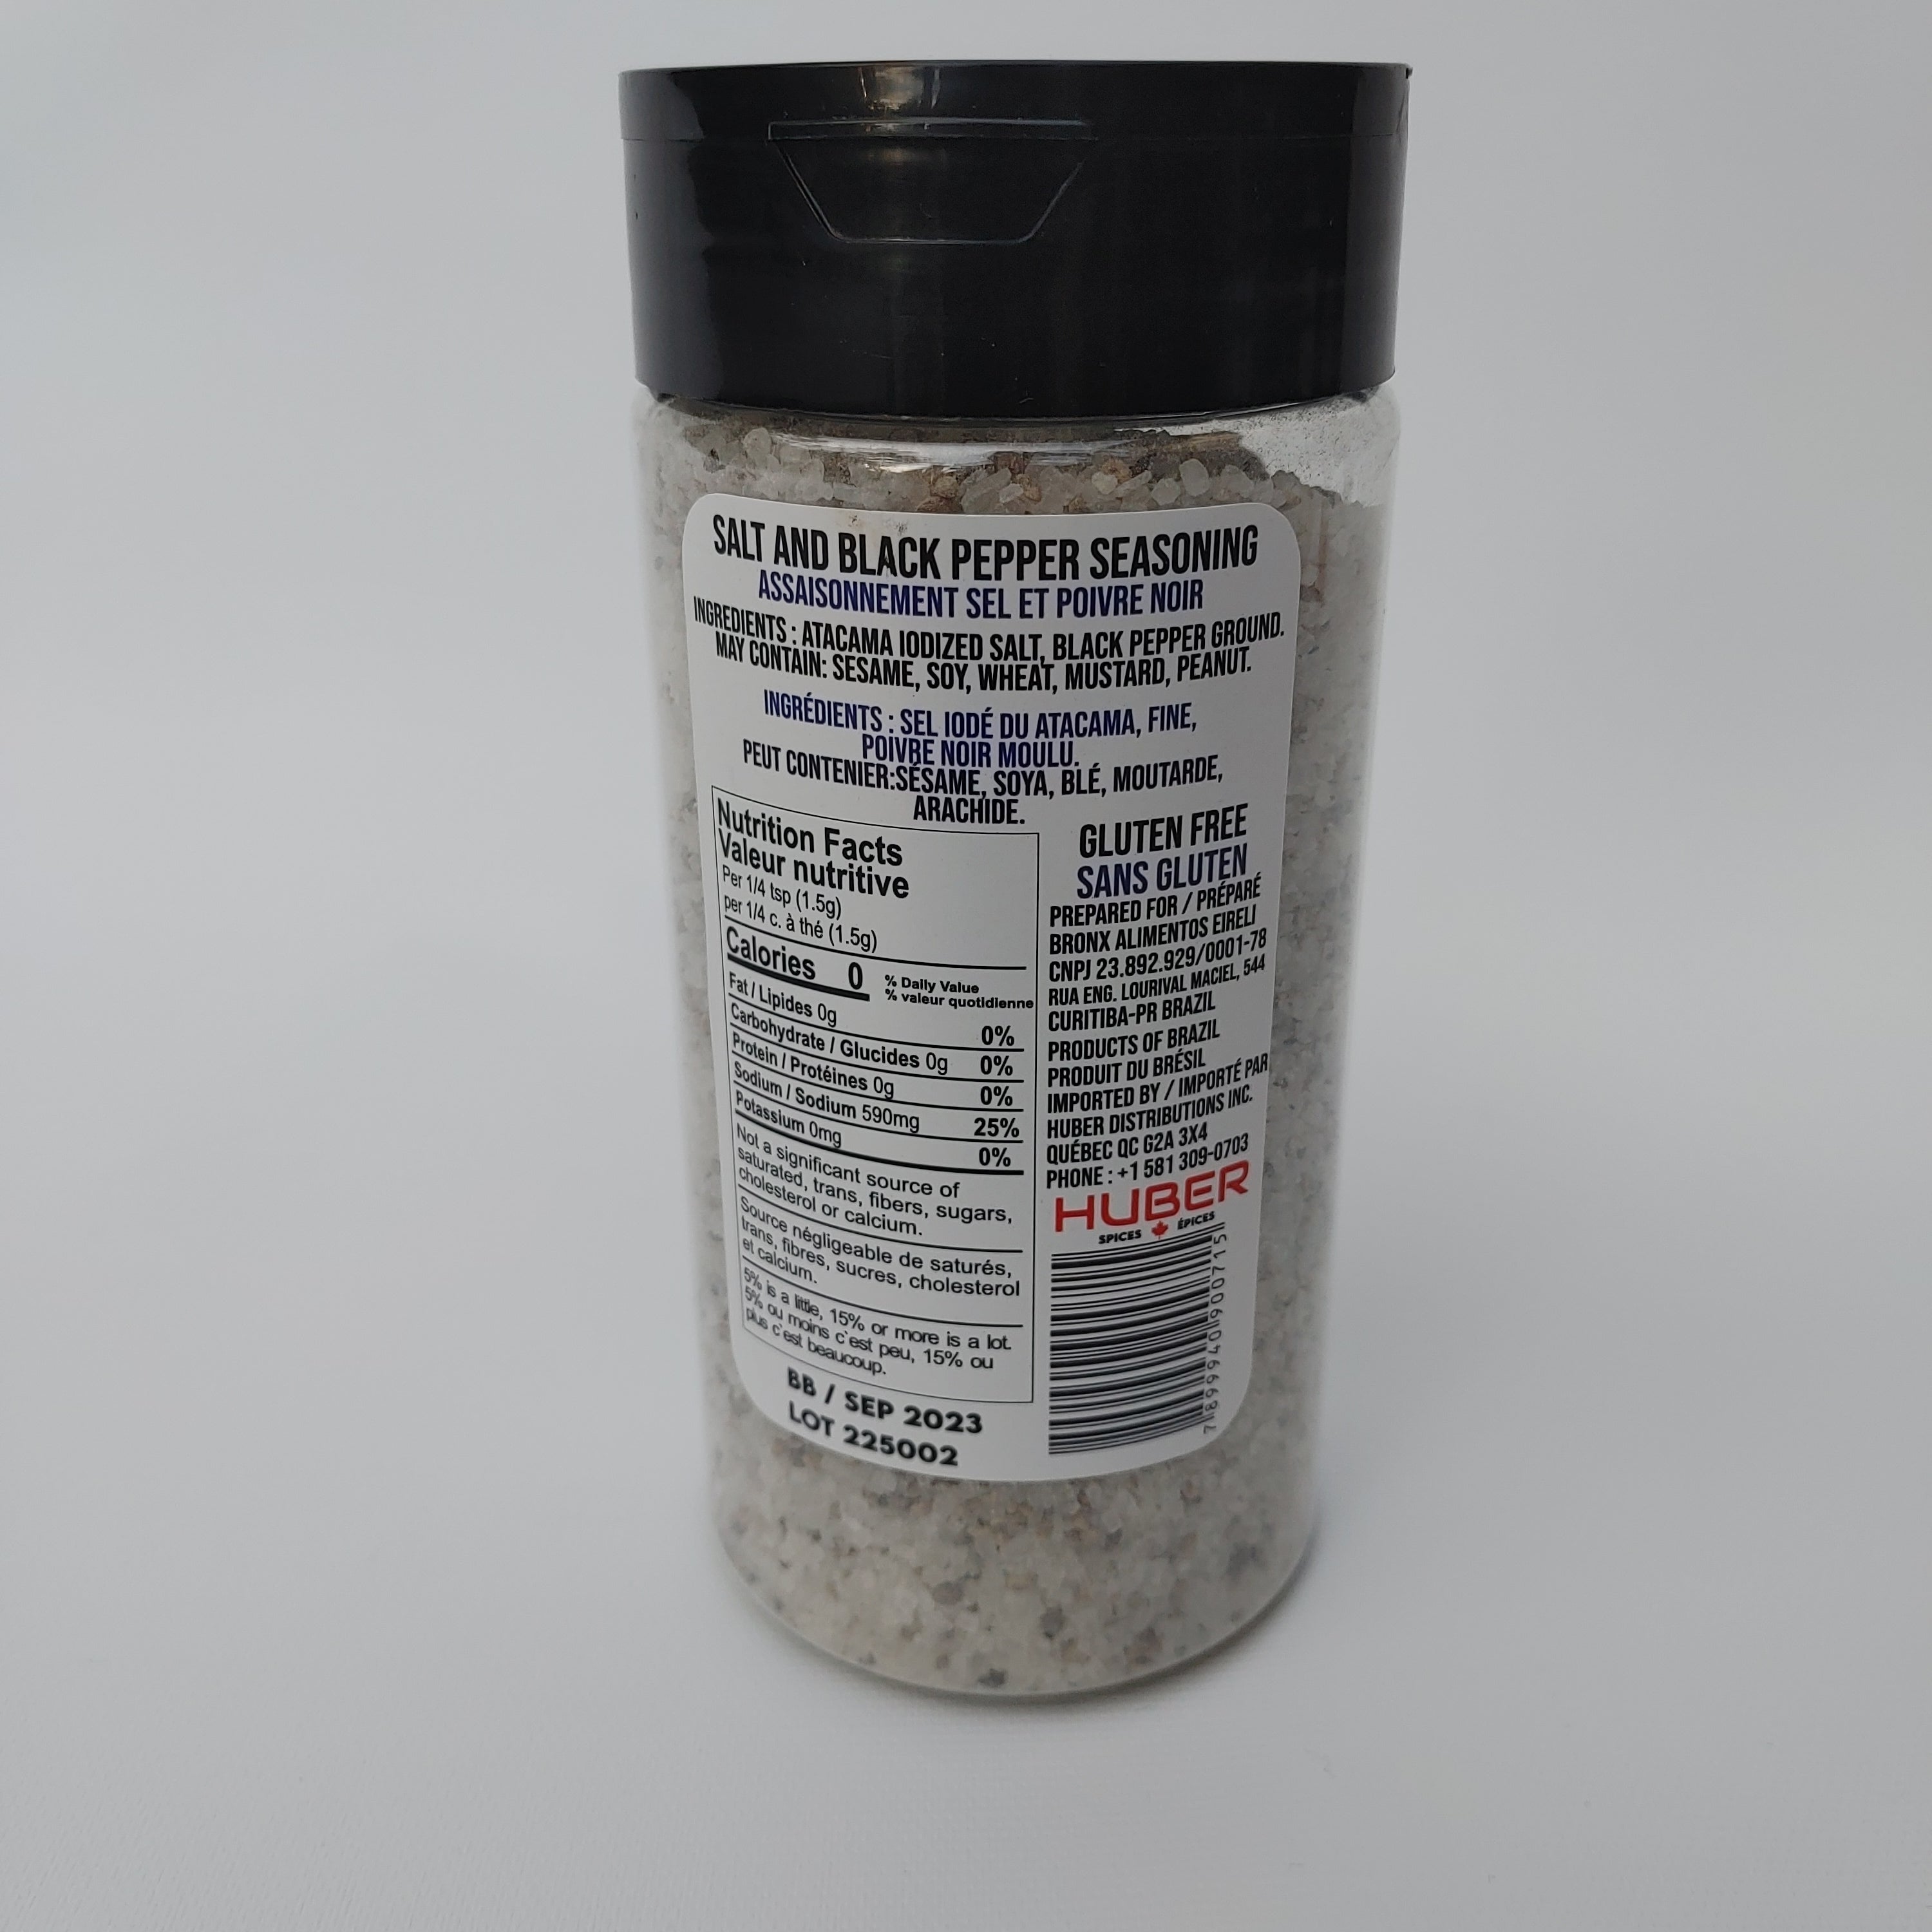 HUBER - Salt Black Pepper Seasoning - FINAL SALE - EXPIRED or CLOSE TO EXPIRY